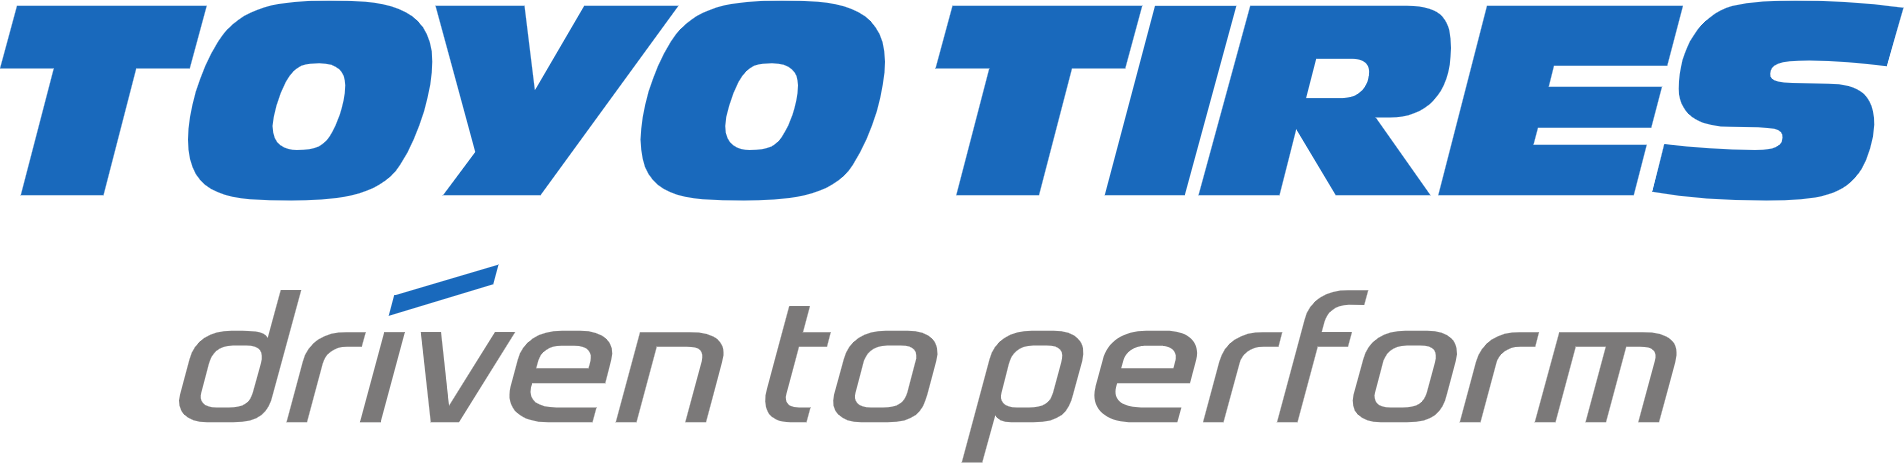 Toyo Tire logo (transparent PNG)